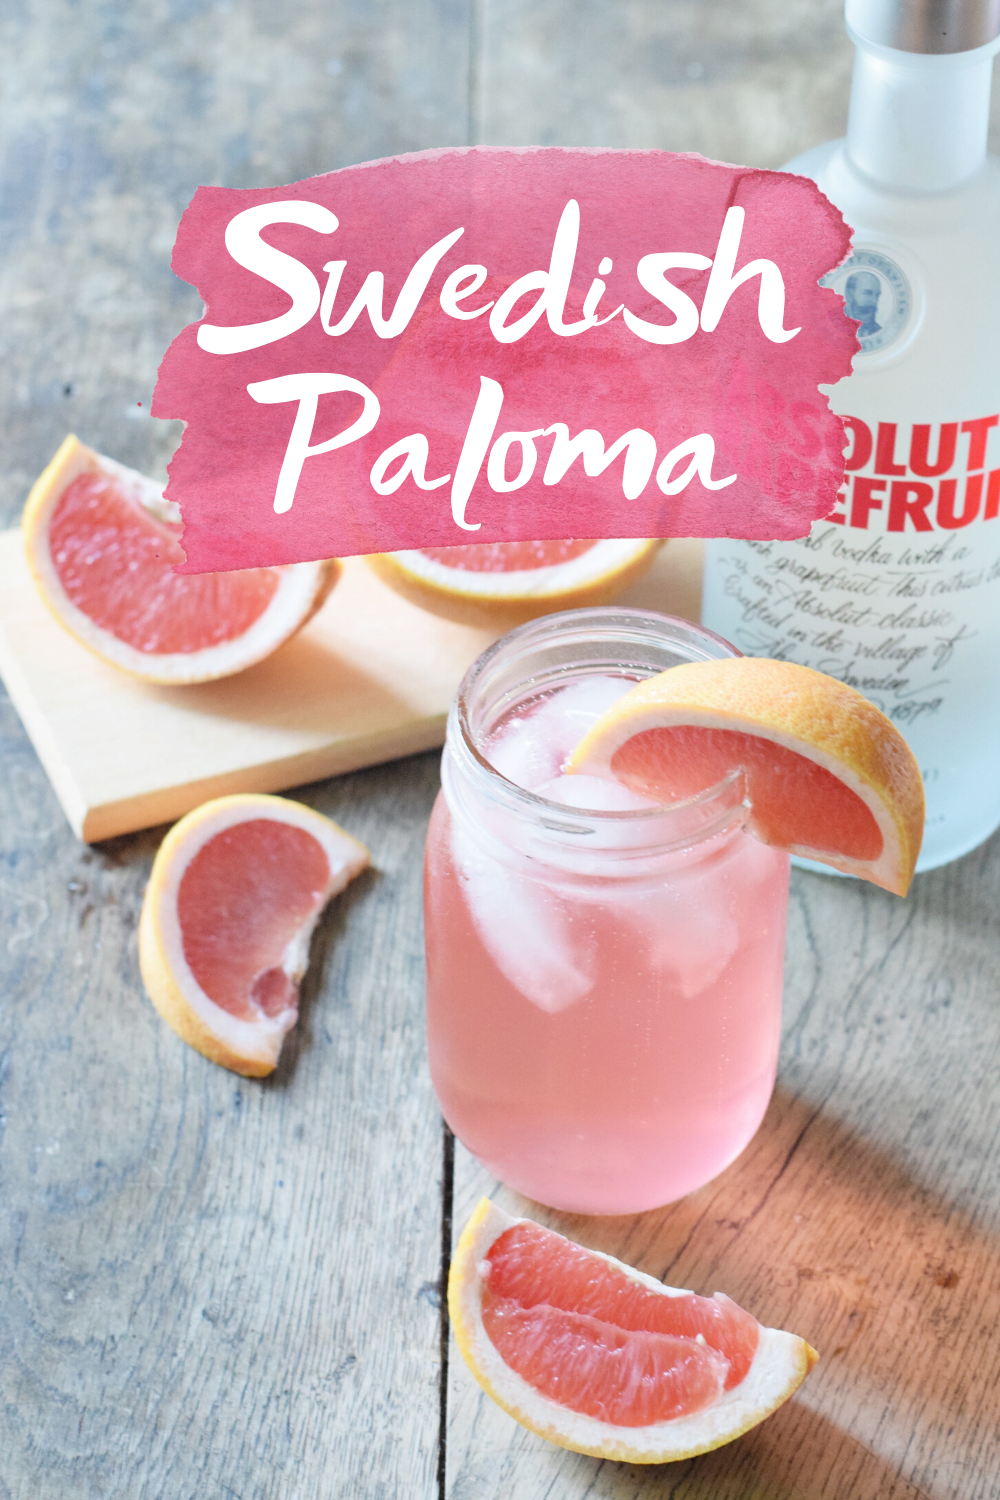 Swedish Paloma